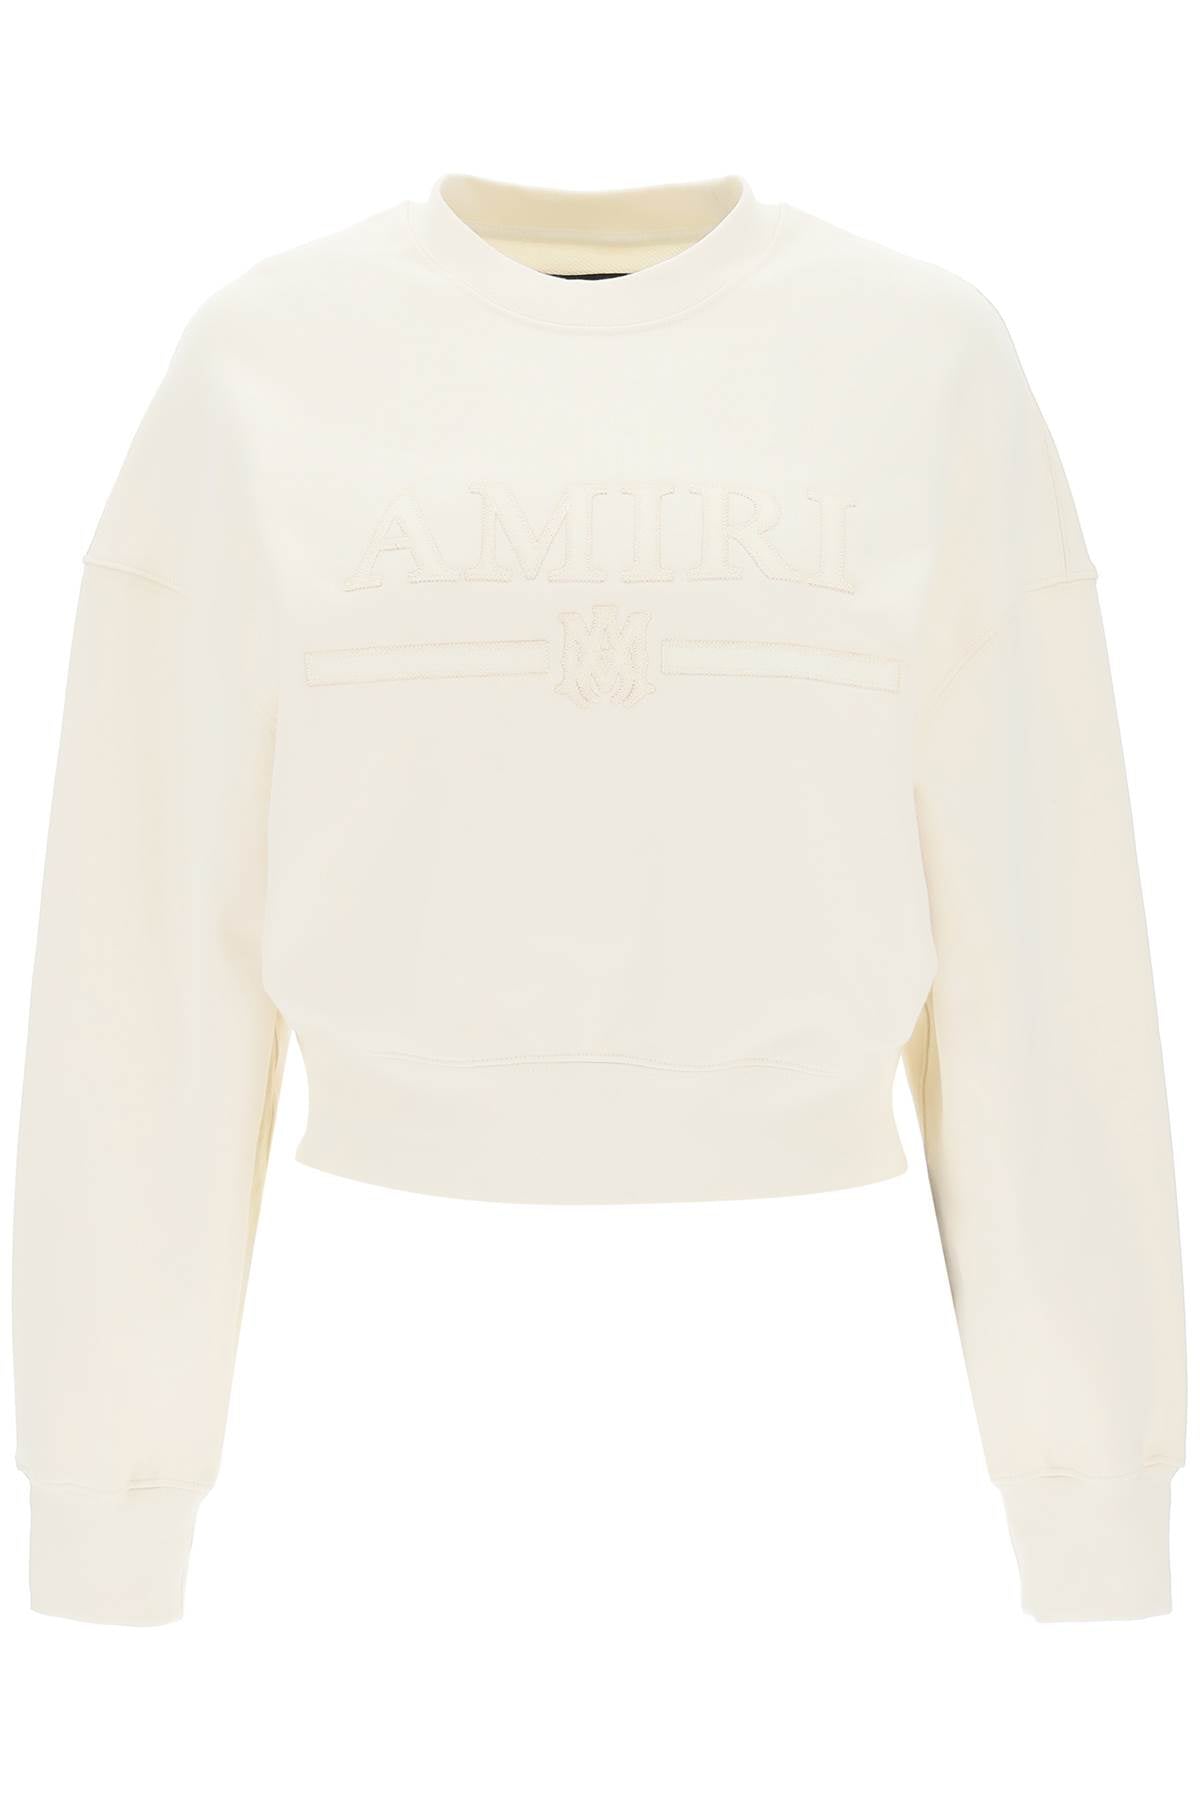 Amiri crew-neck sweatshirt with logo patch-0